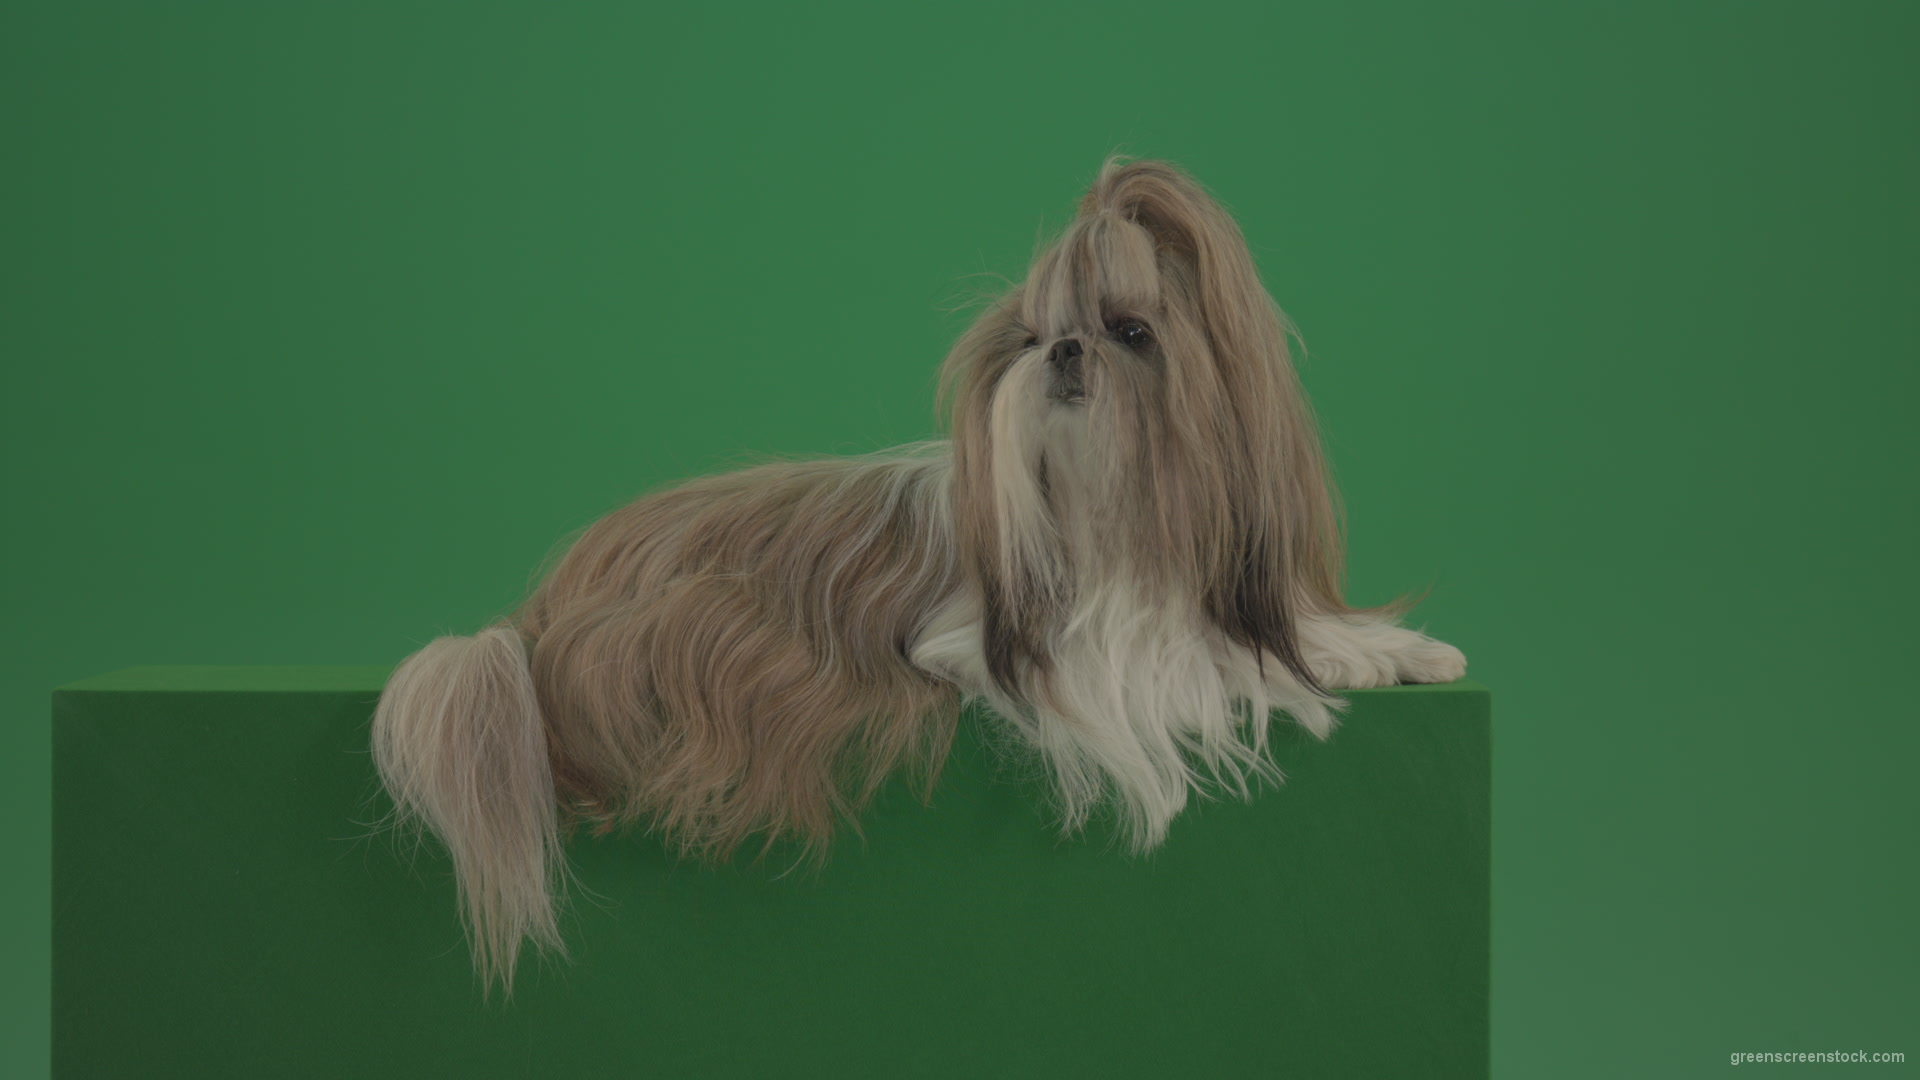 Luxury-bright-hair-Shihtzu-dog-pet-relaxing-on-green-screen-4K_006 Green Screen Stock